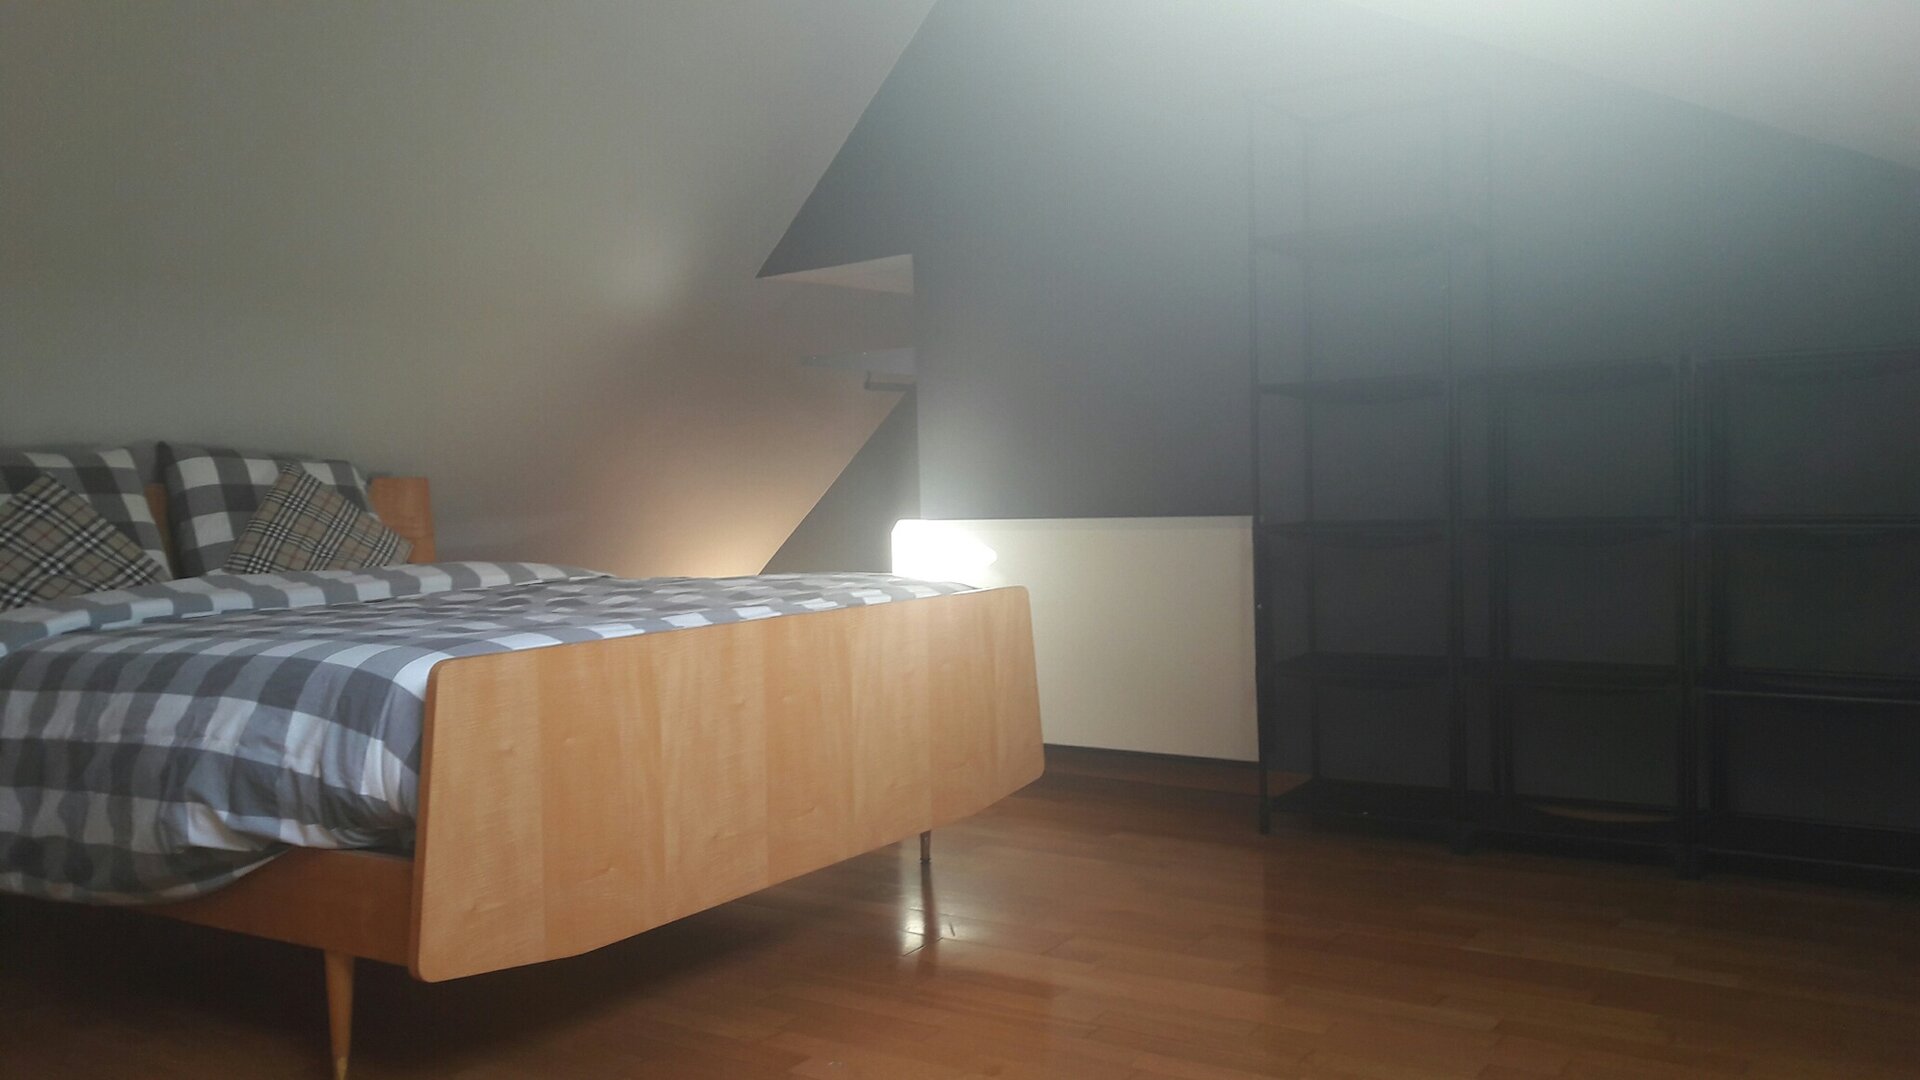 Vakantiewoning Maas & Mechelen - slaapkamer 2pers